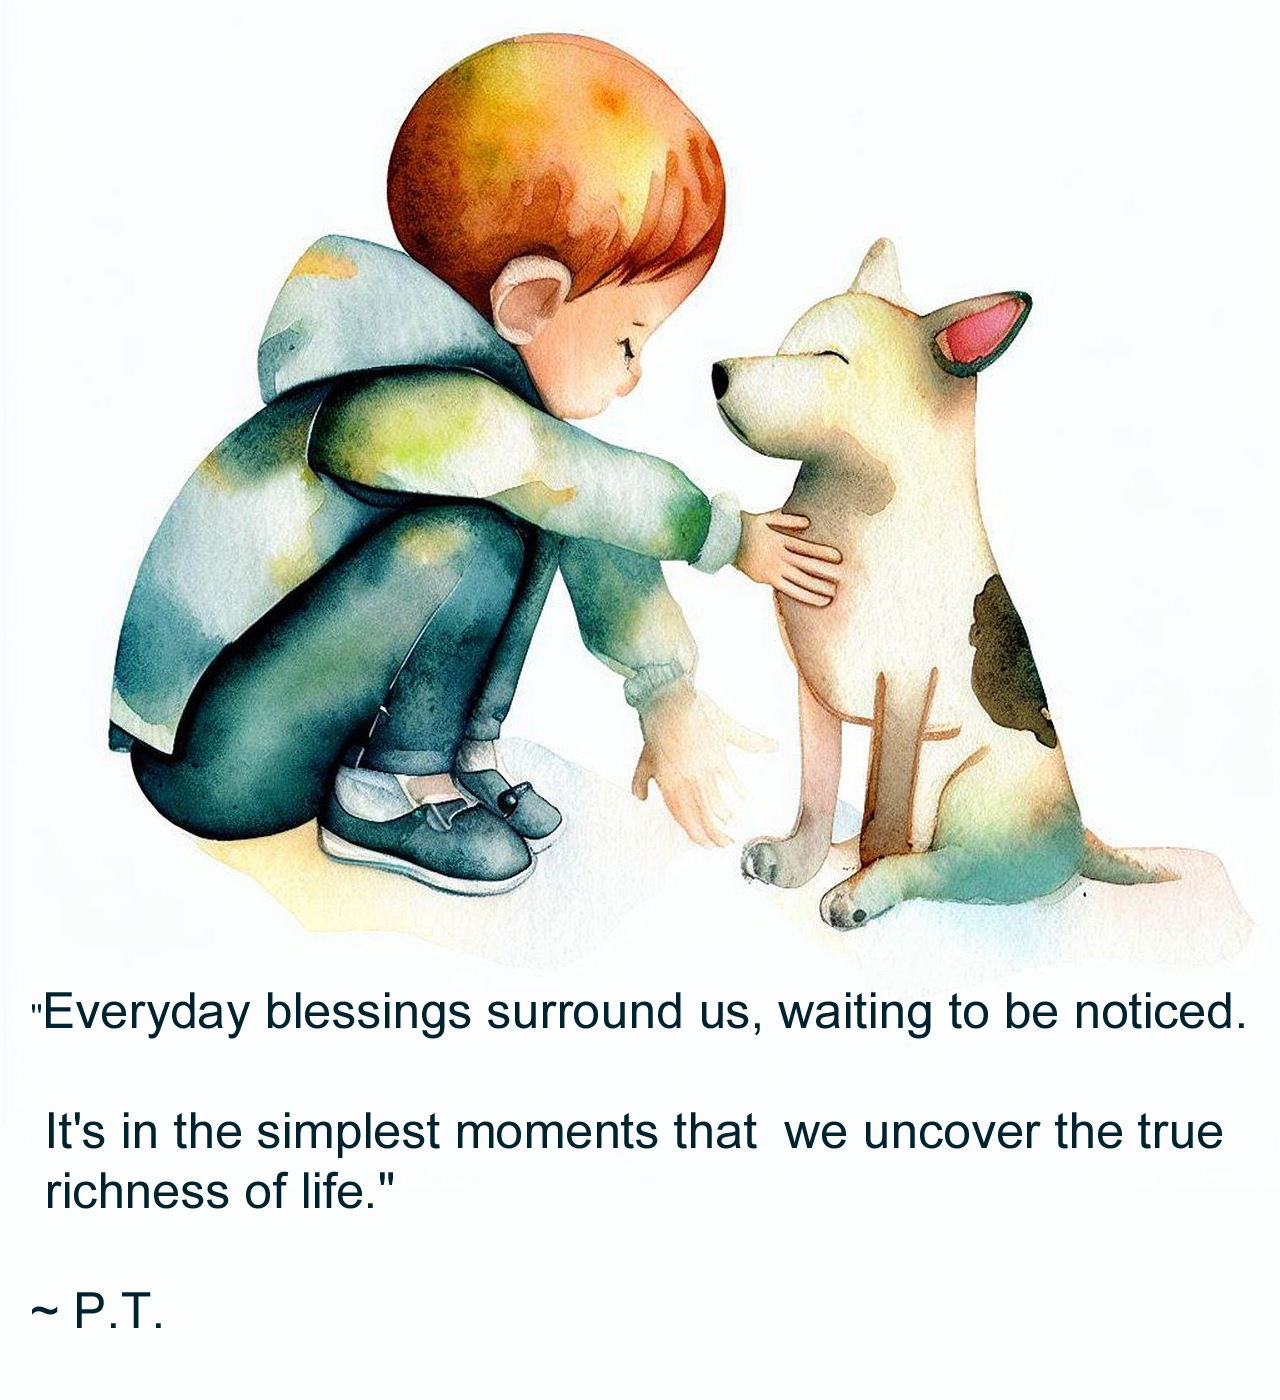 Everyday Blessings